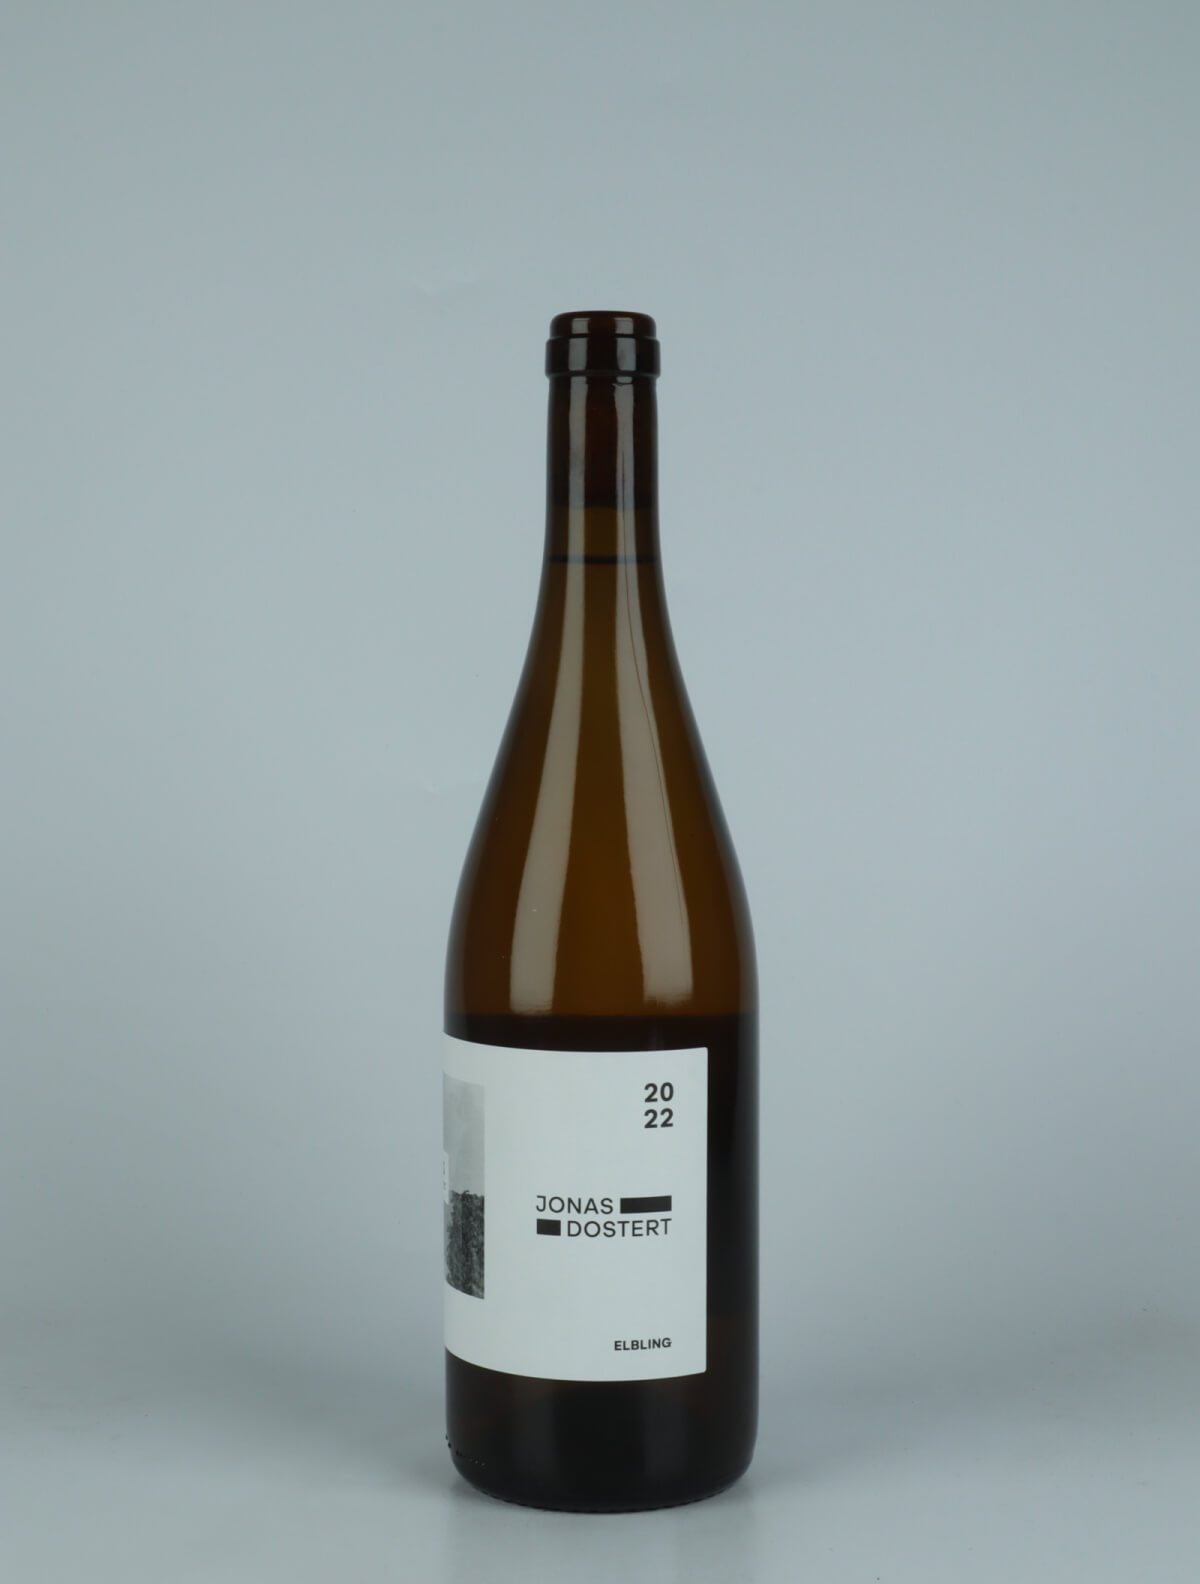 A bottle 2022 Elbling White wine from Jonas Dostert, Mosel in Germany